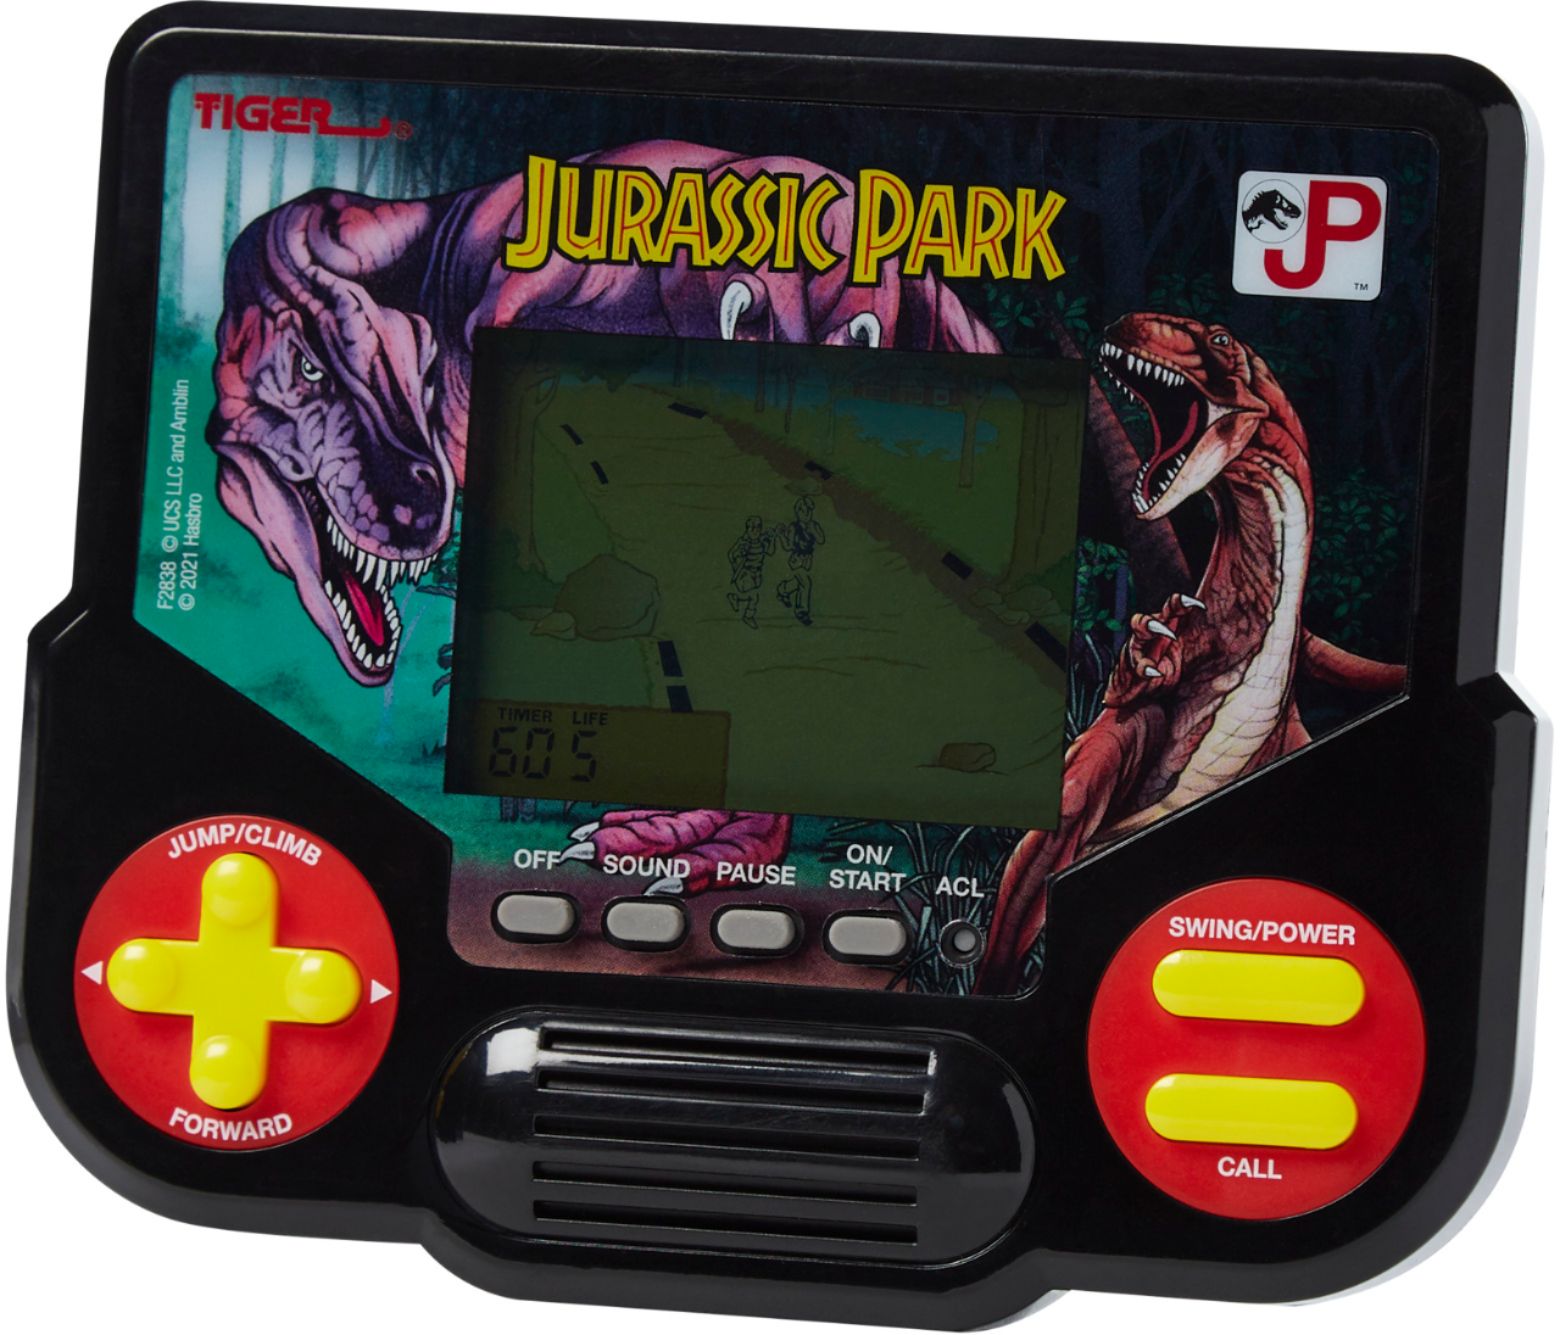 Video Game Retrô Portátil Tiger Electronics Jurassic Park, LCD, Hasbro -  F2838 - Consoles e Jogos Clássicos - Magazine Luiza